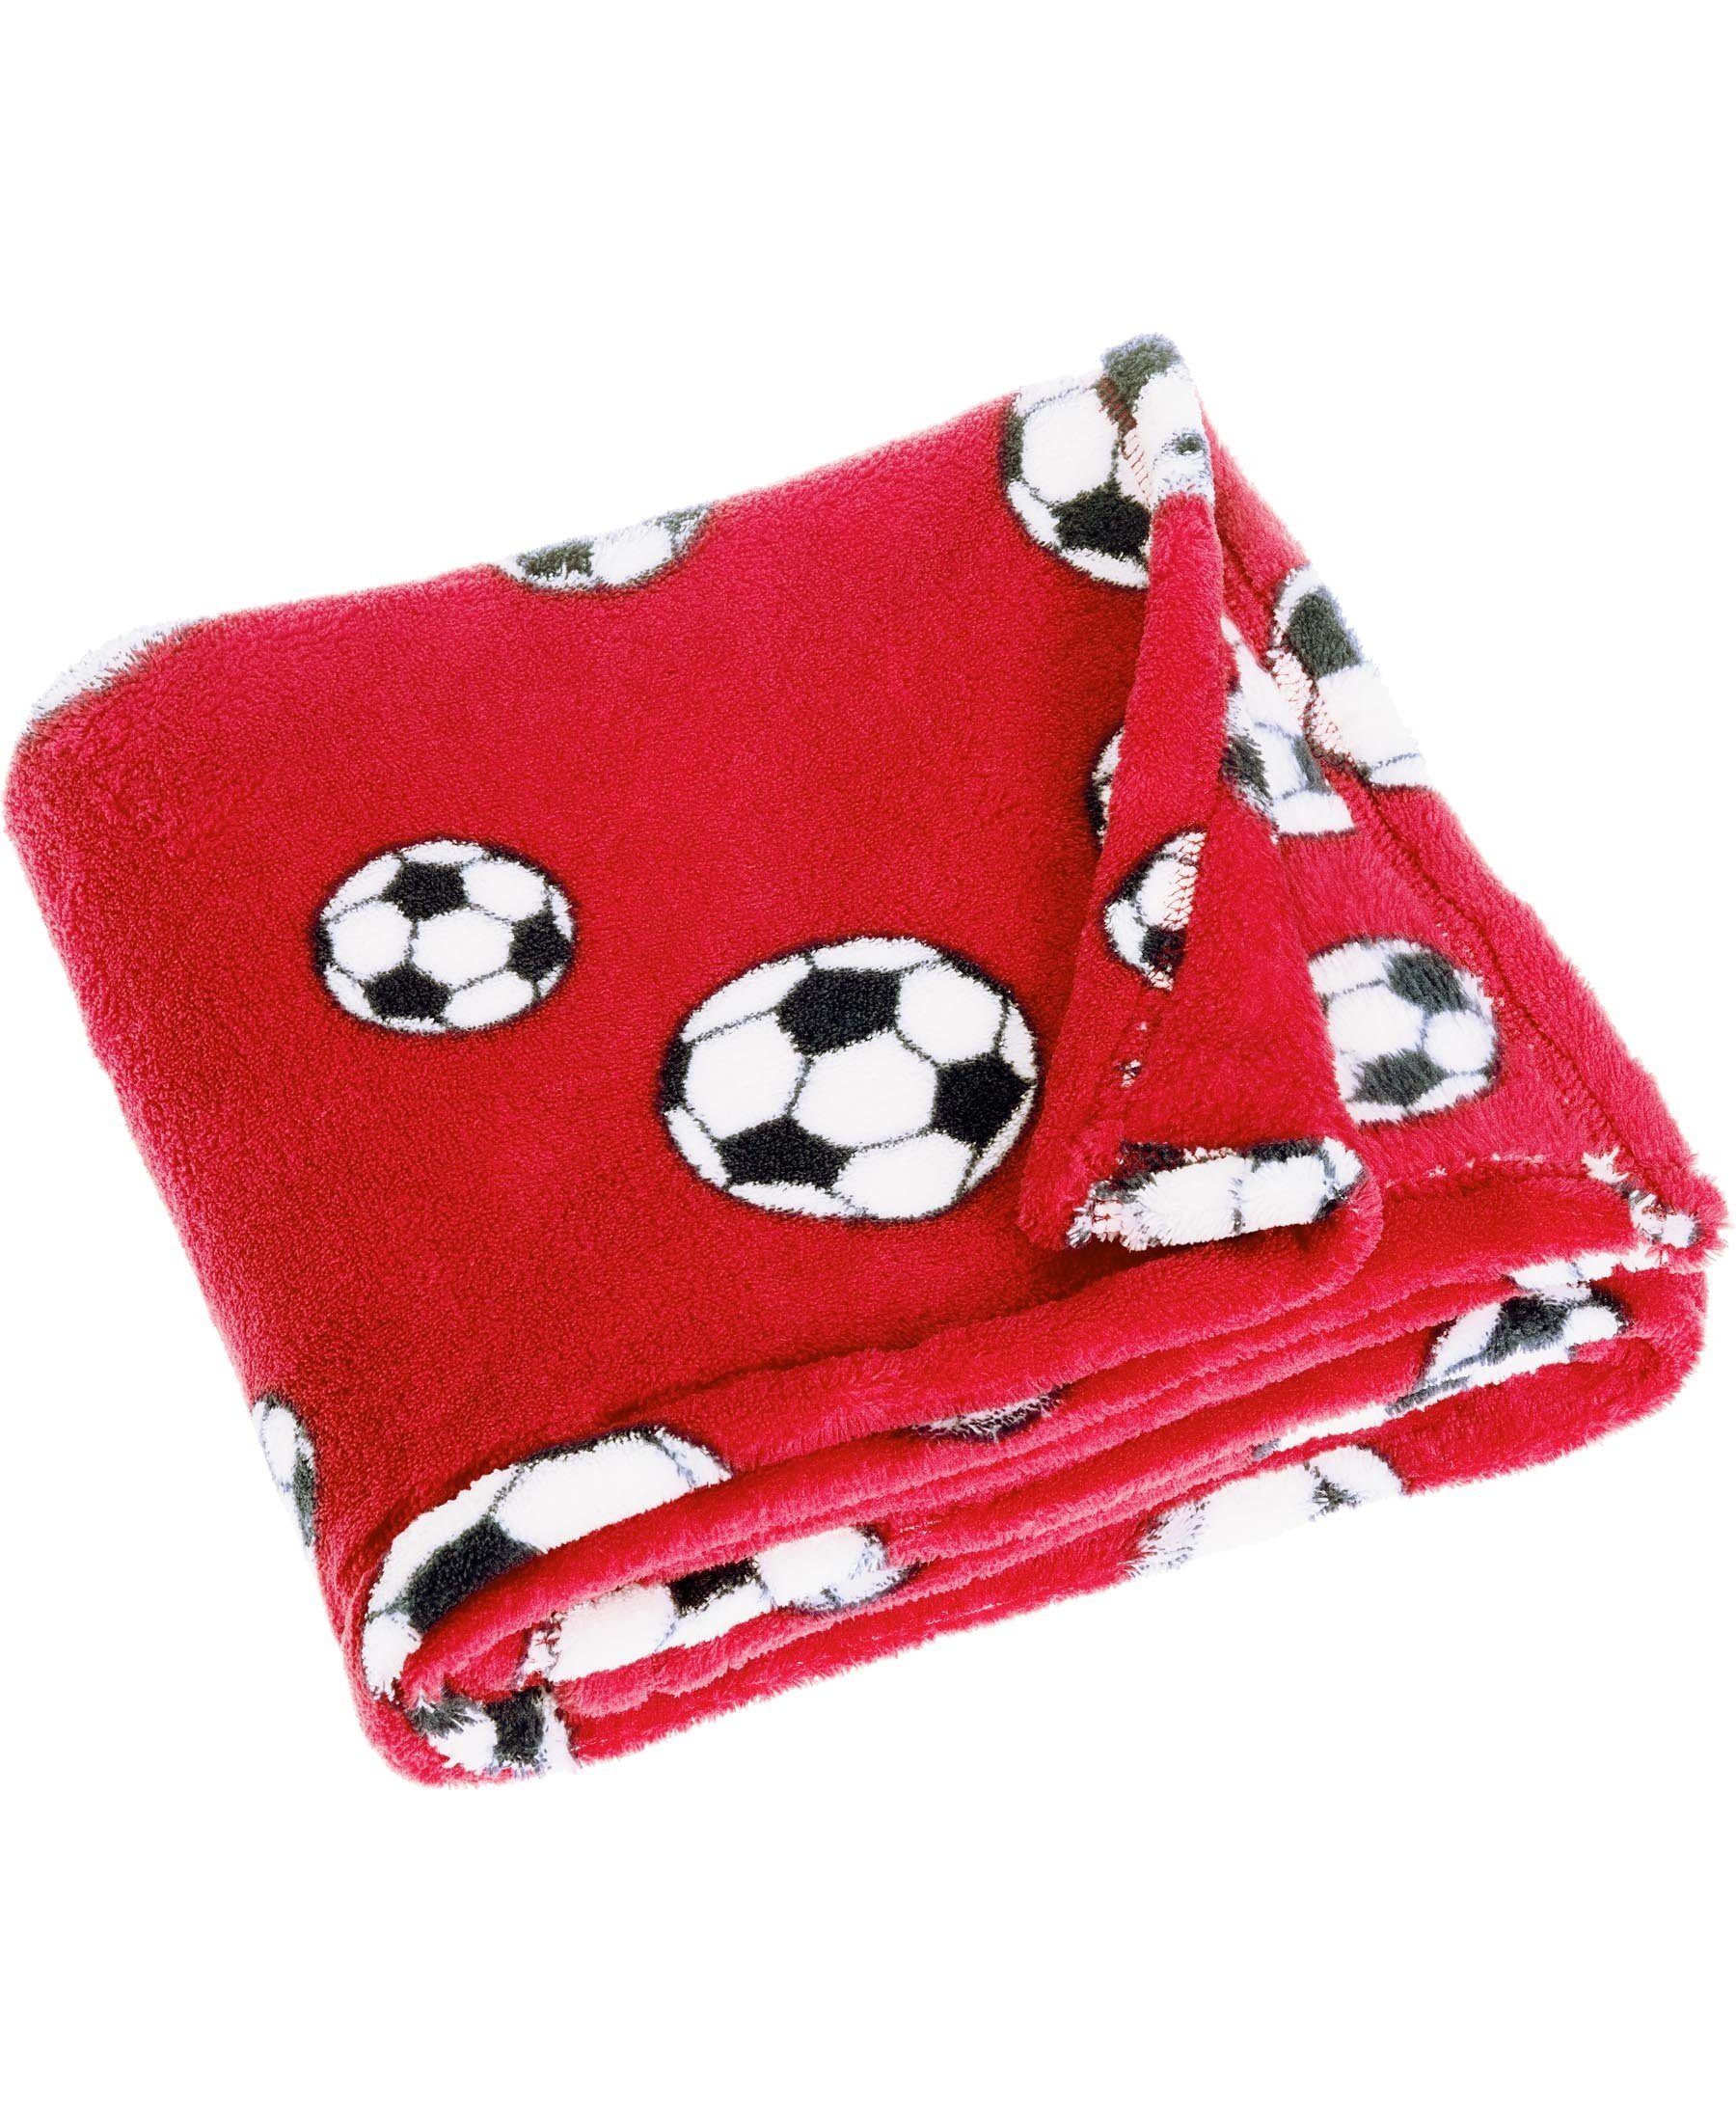 Babydecke Fleece-Decke Fußball, Playshoes rot